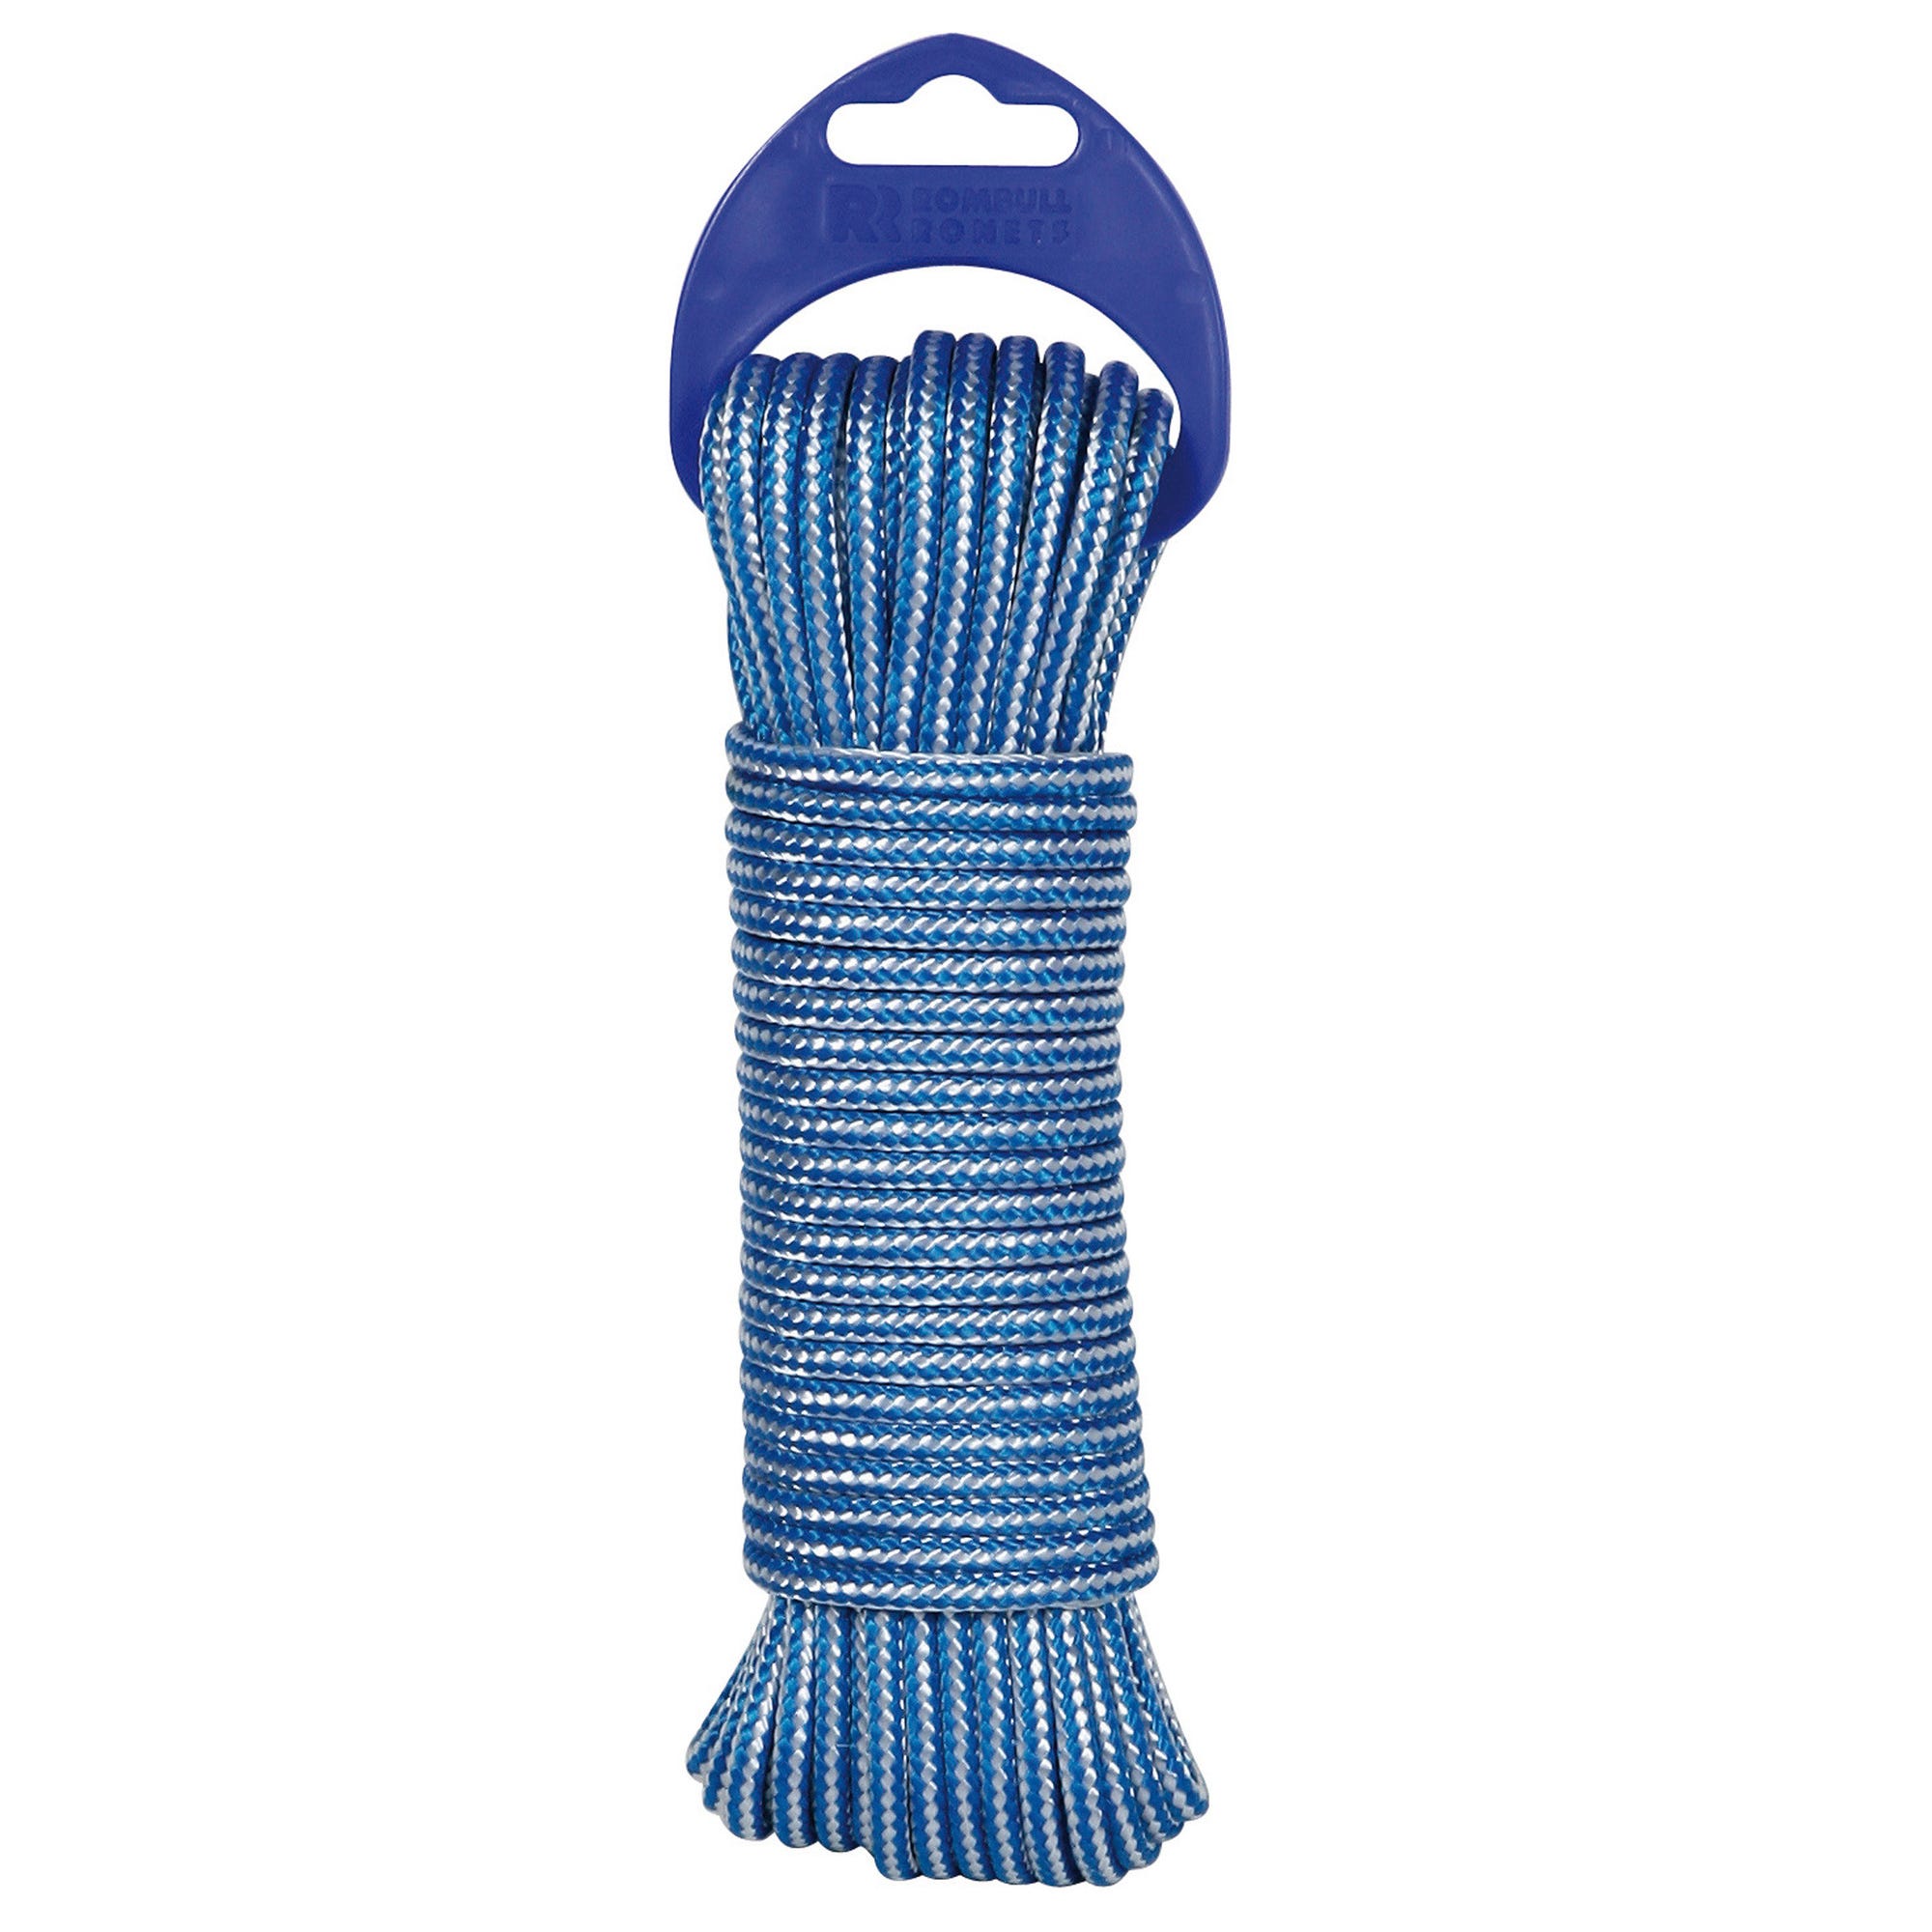 Cordeau polypropylène bleu et blanc Long.25 m Diam.4 mm 0